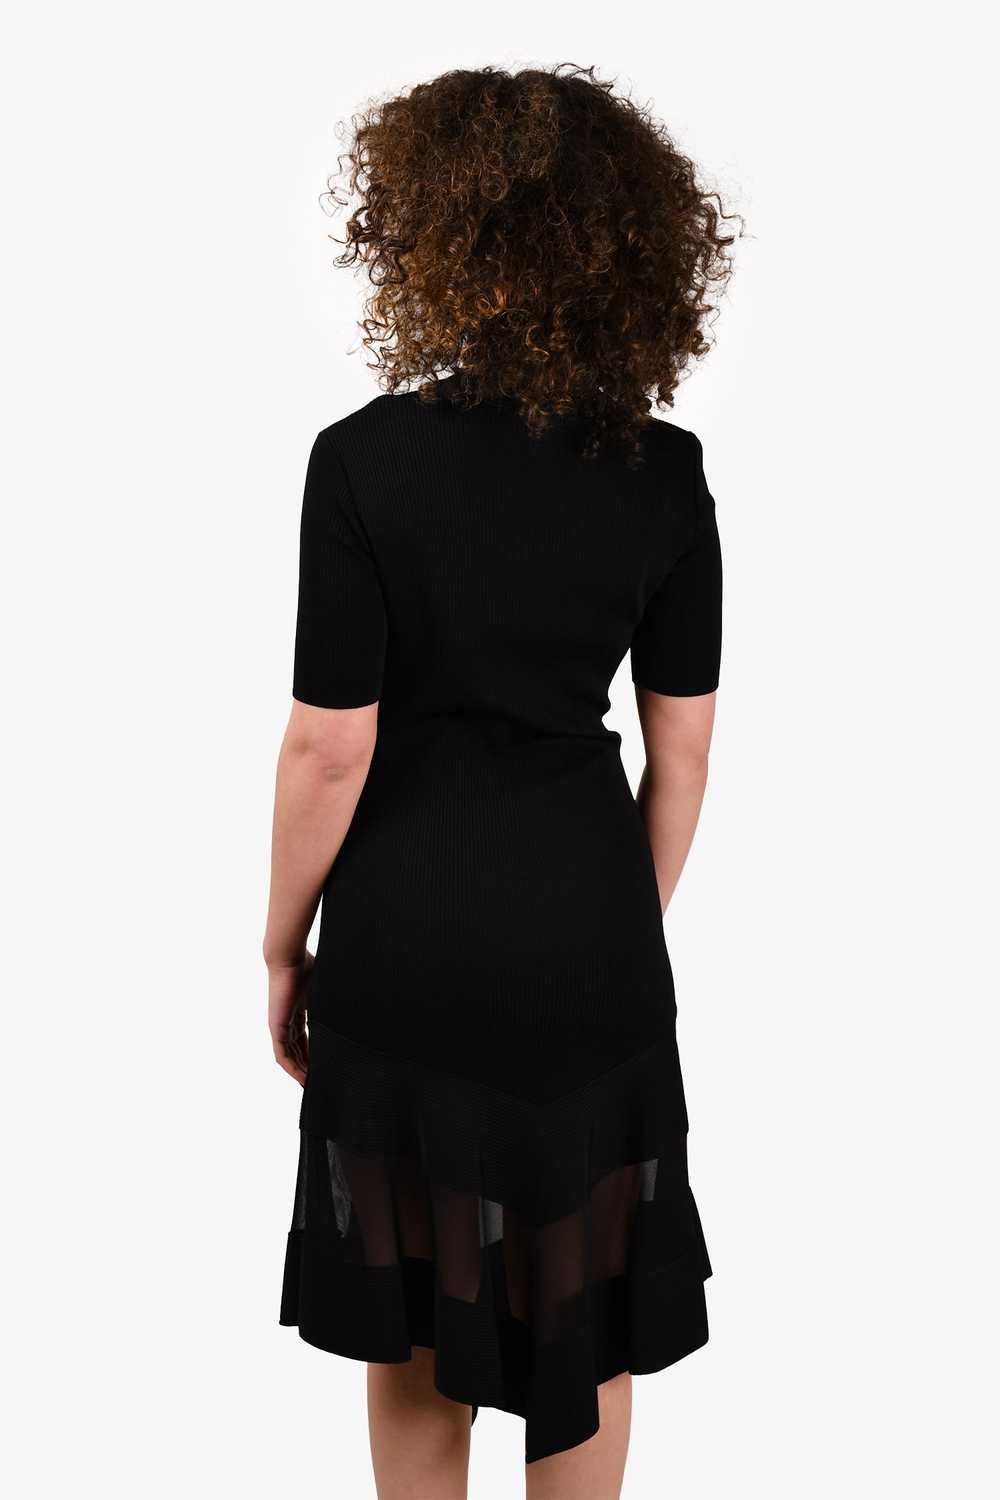 Givenchy Black Ribbed A Line Dress Size M - image 4